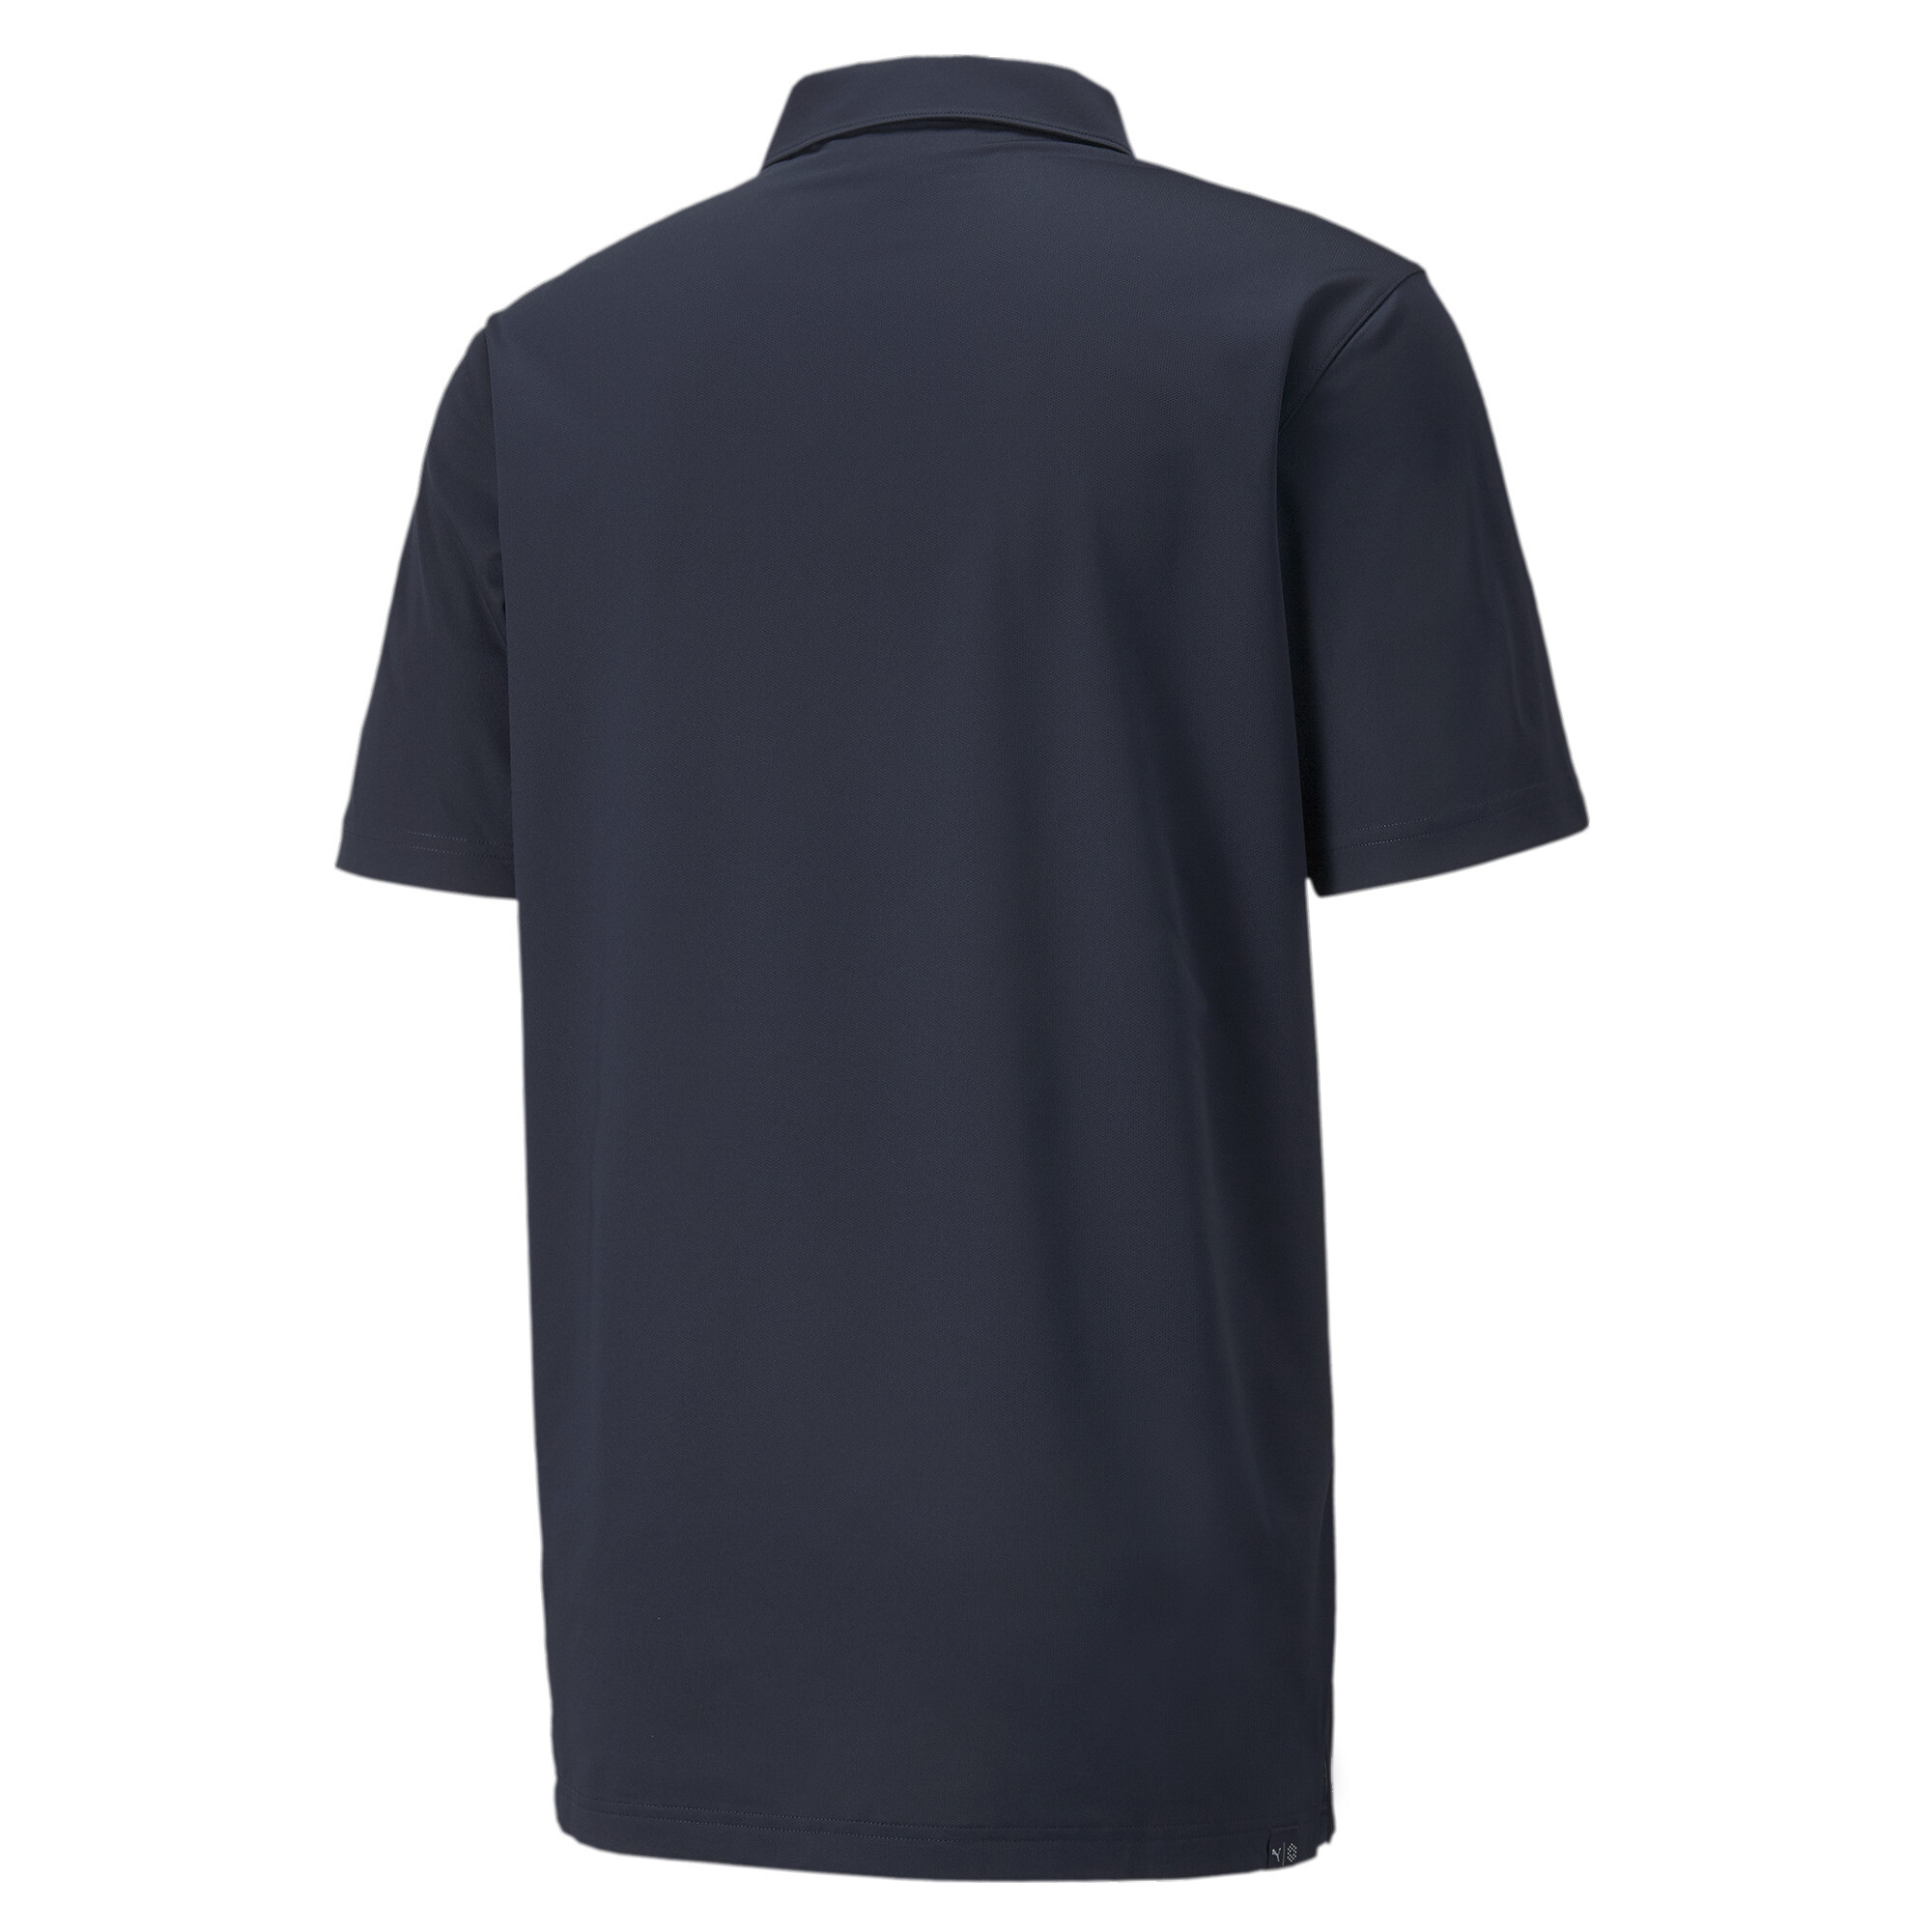 Men's Puma Gamer's Golf Polo Shirt T-Shirt, Blue T-Shirt, Size L T-Shirt, Clothing